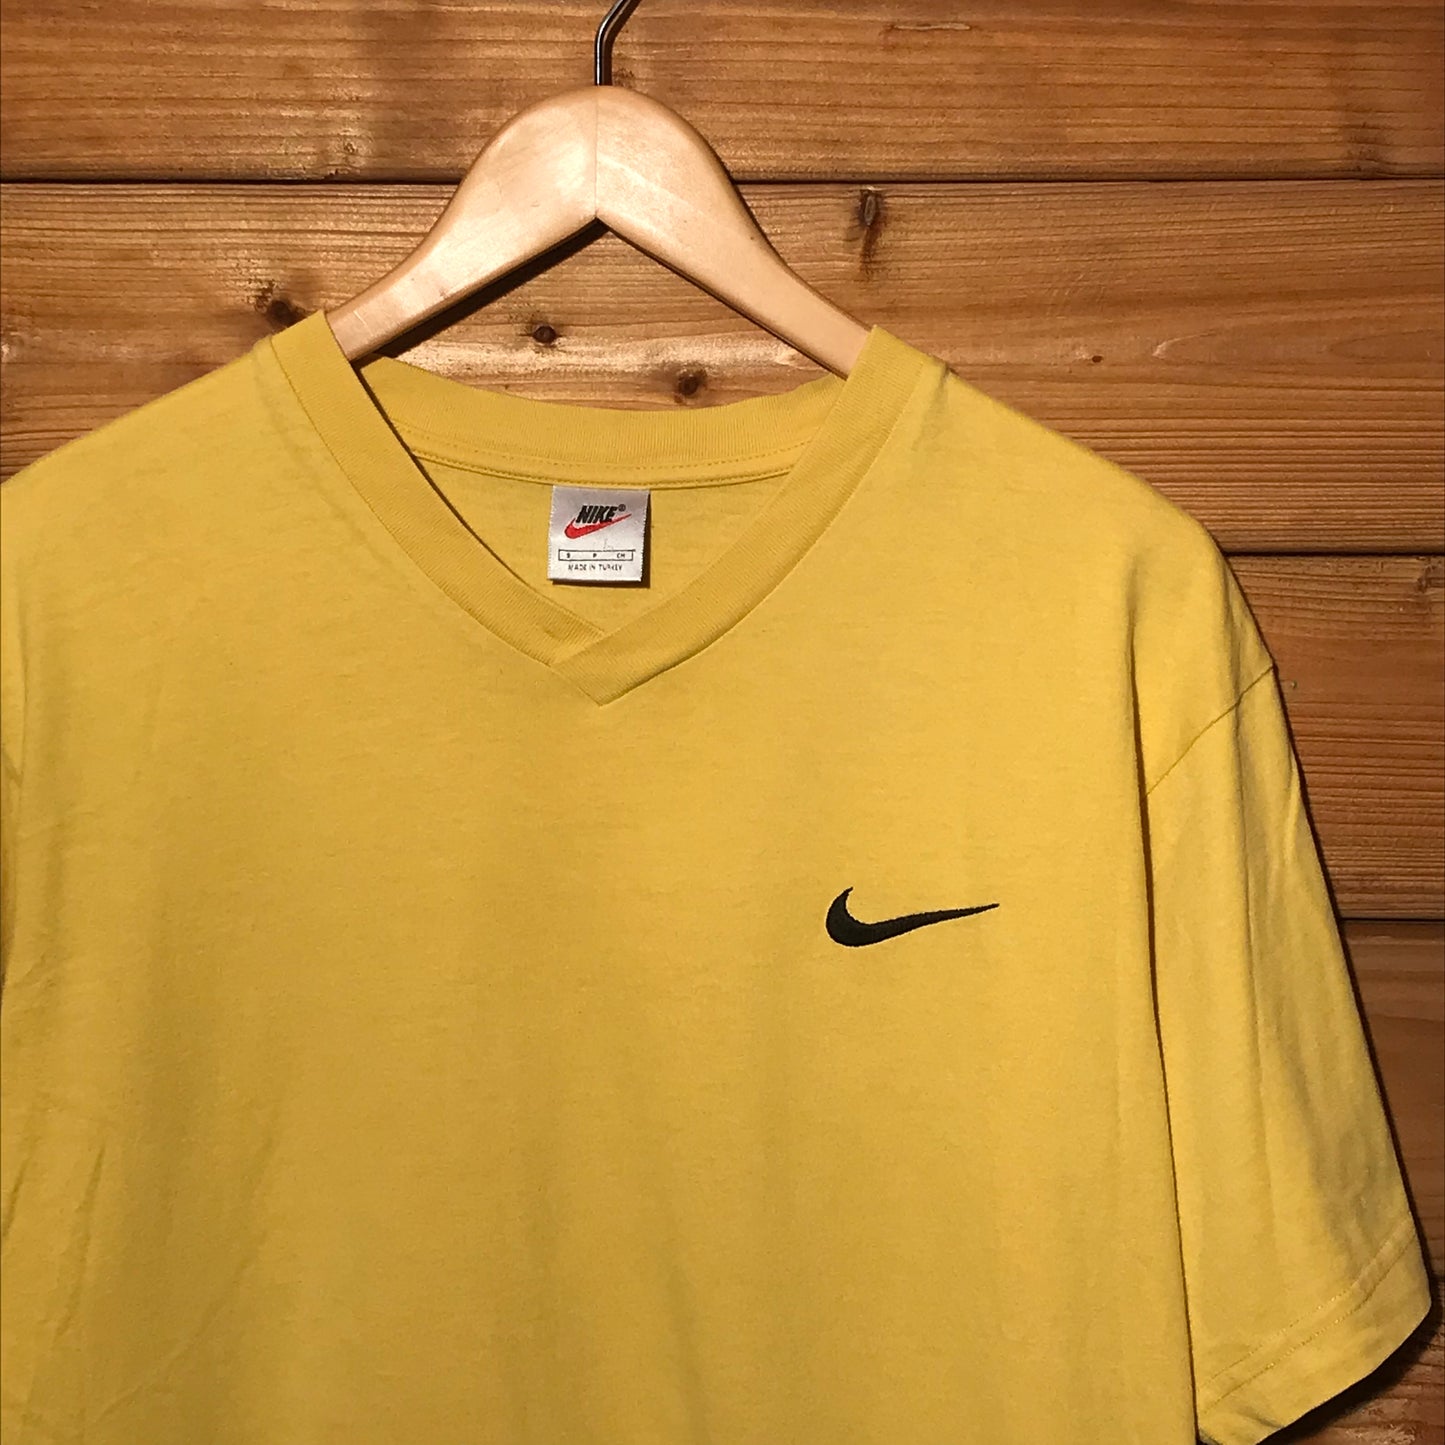 Nike essentails t shirt – HeresWear